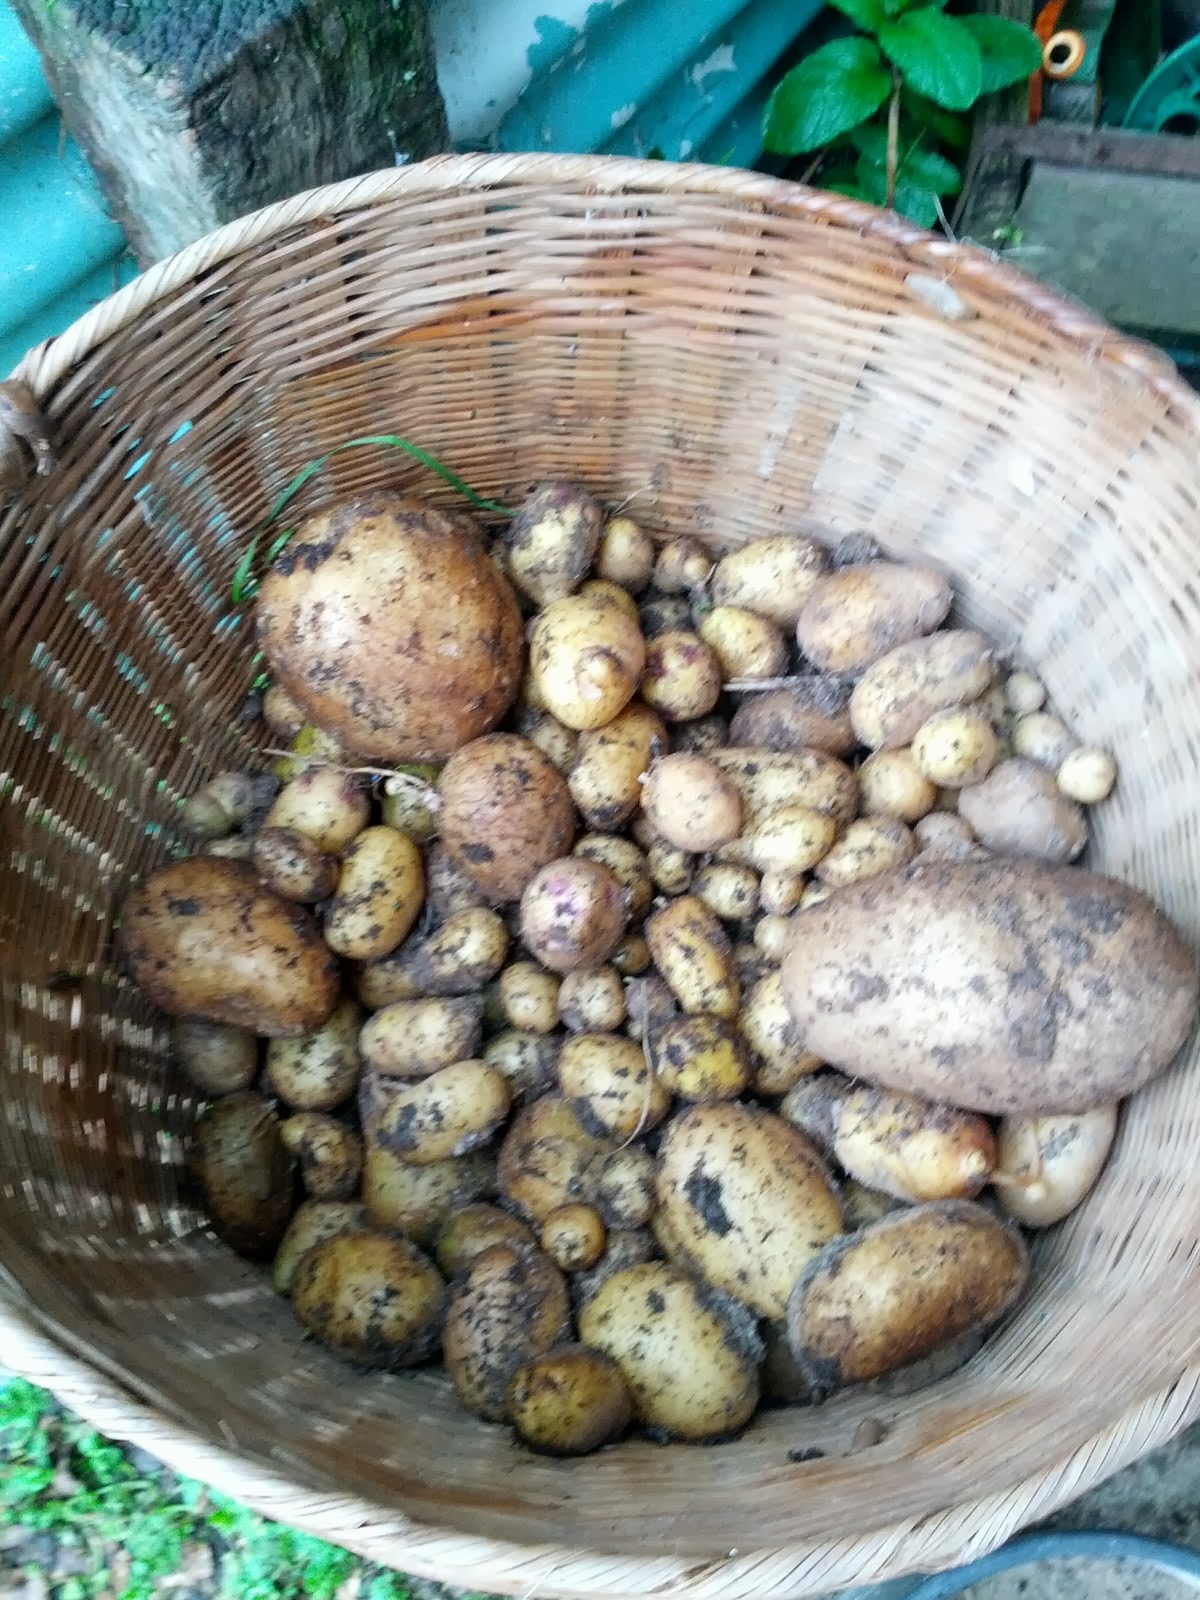 Last of the potato harvest. Southern cross P.I